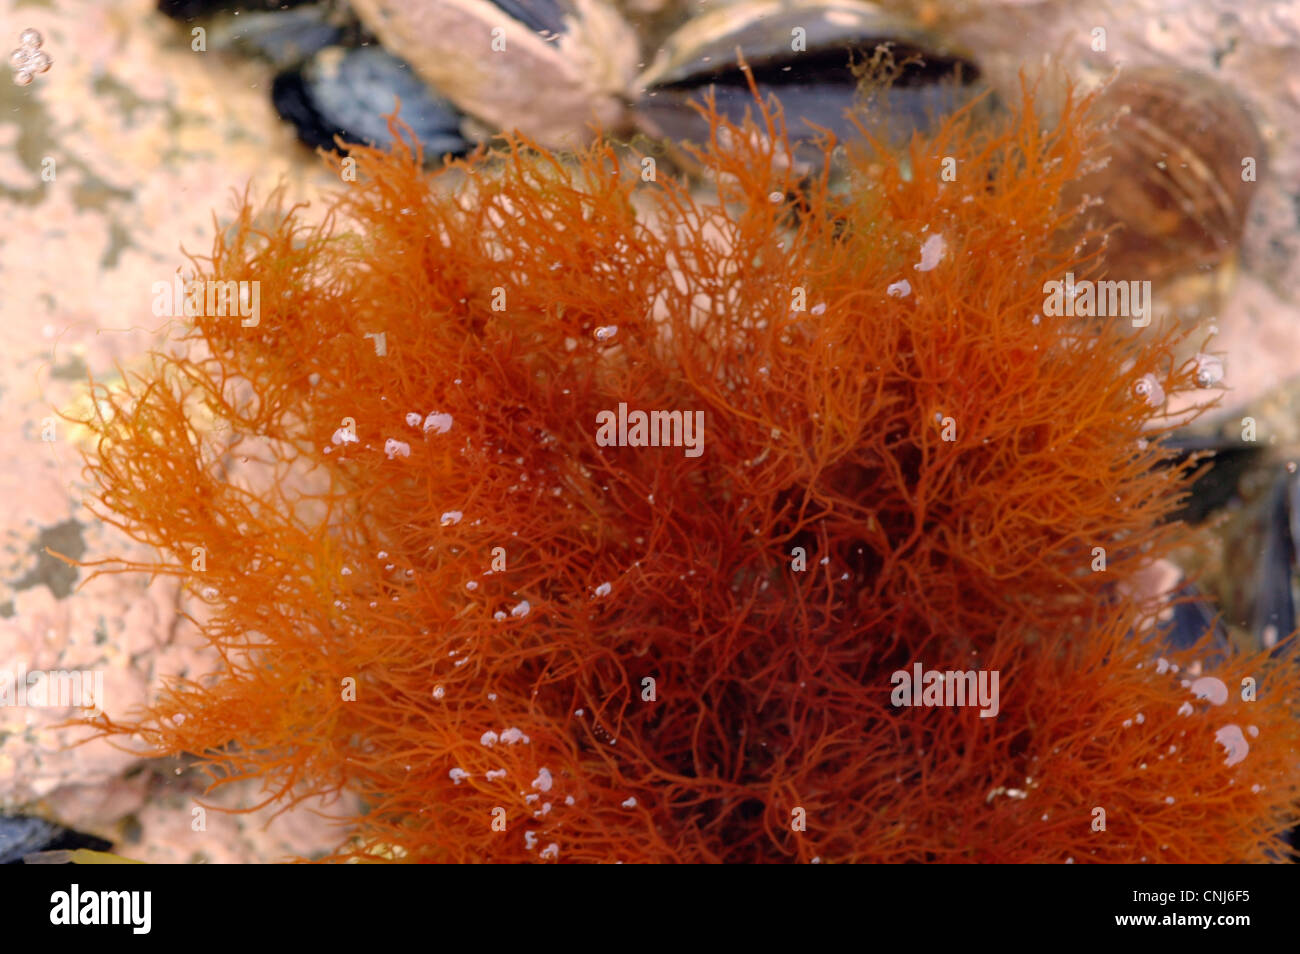 A red seaweed (Polysiphonia fruticulosa) in a rockpool, UK Stock Photo